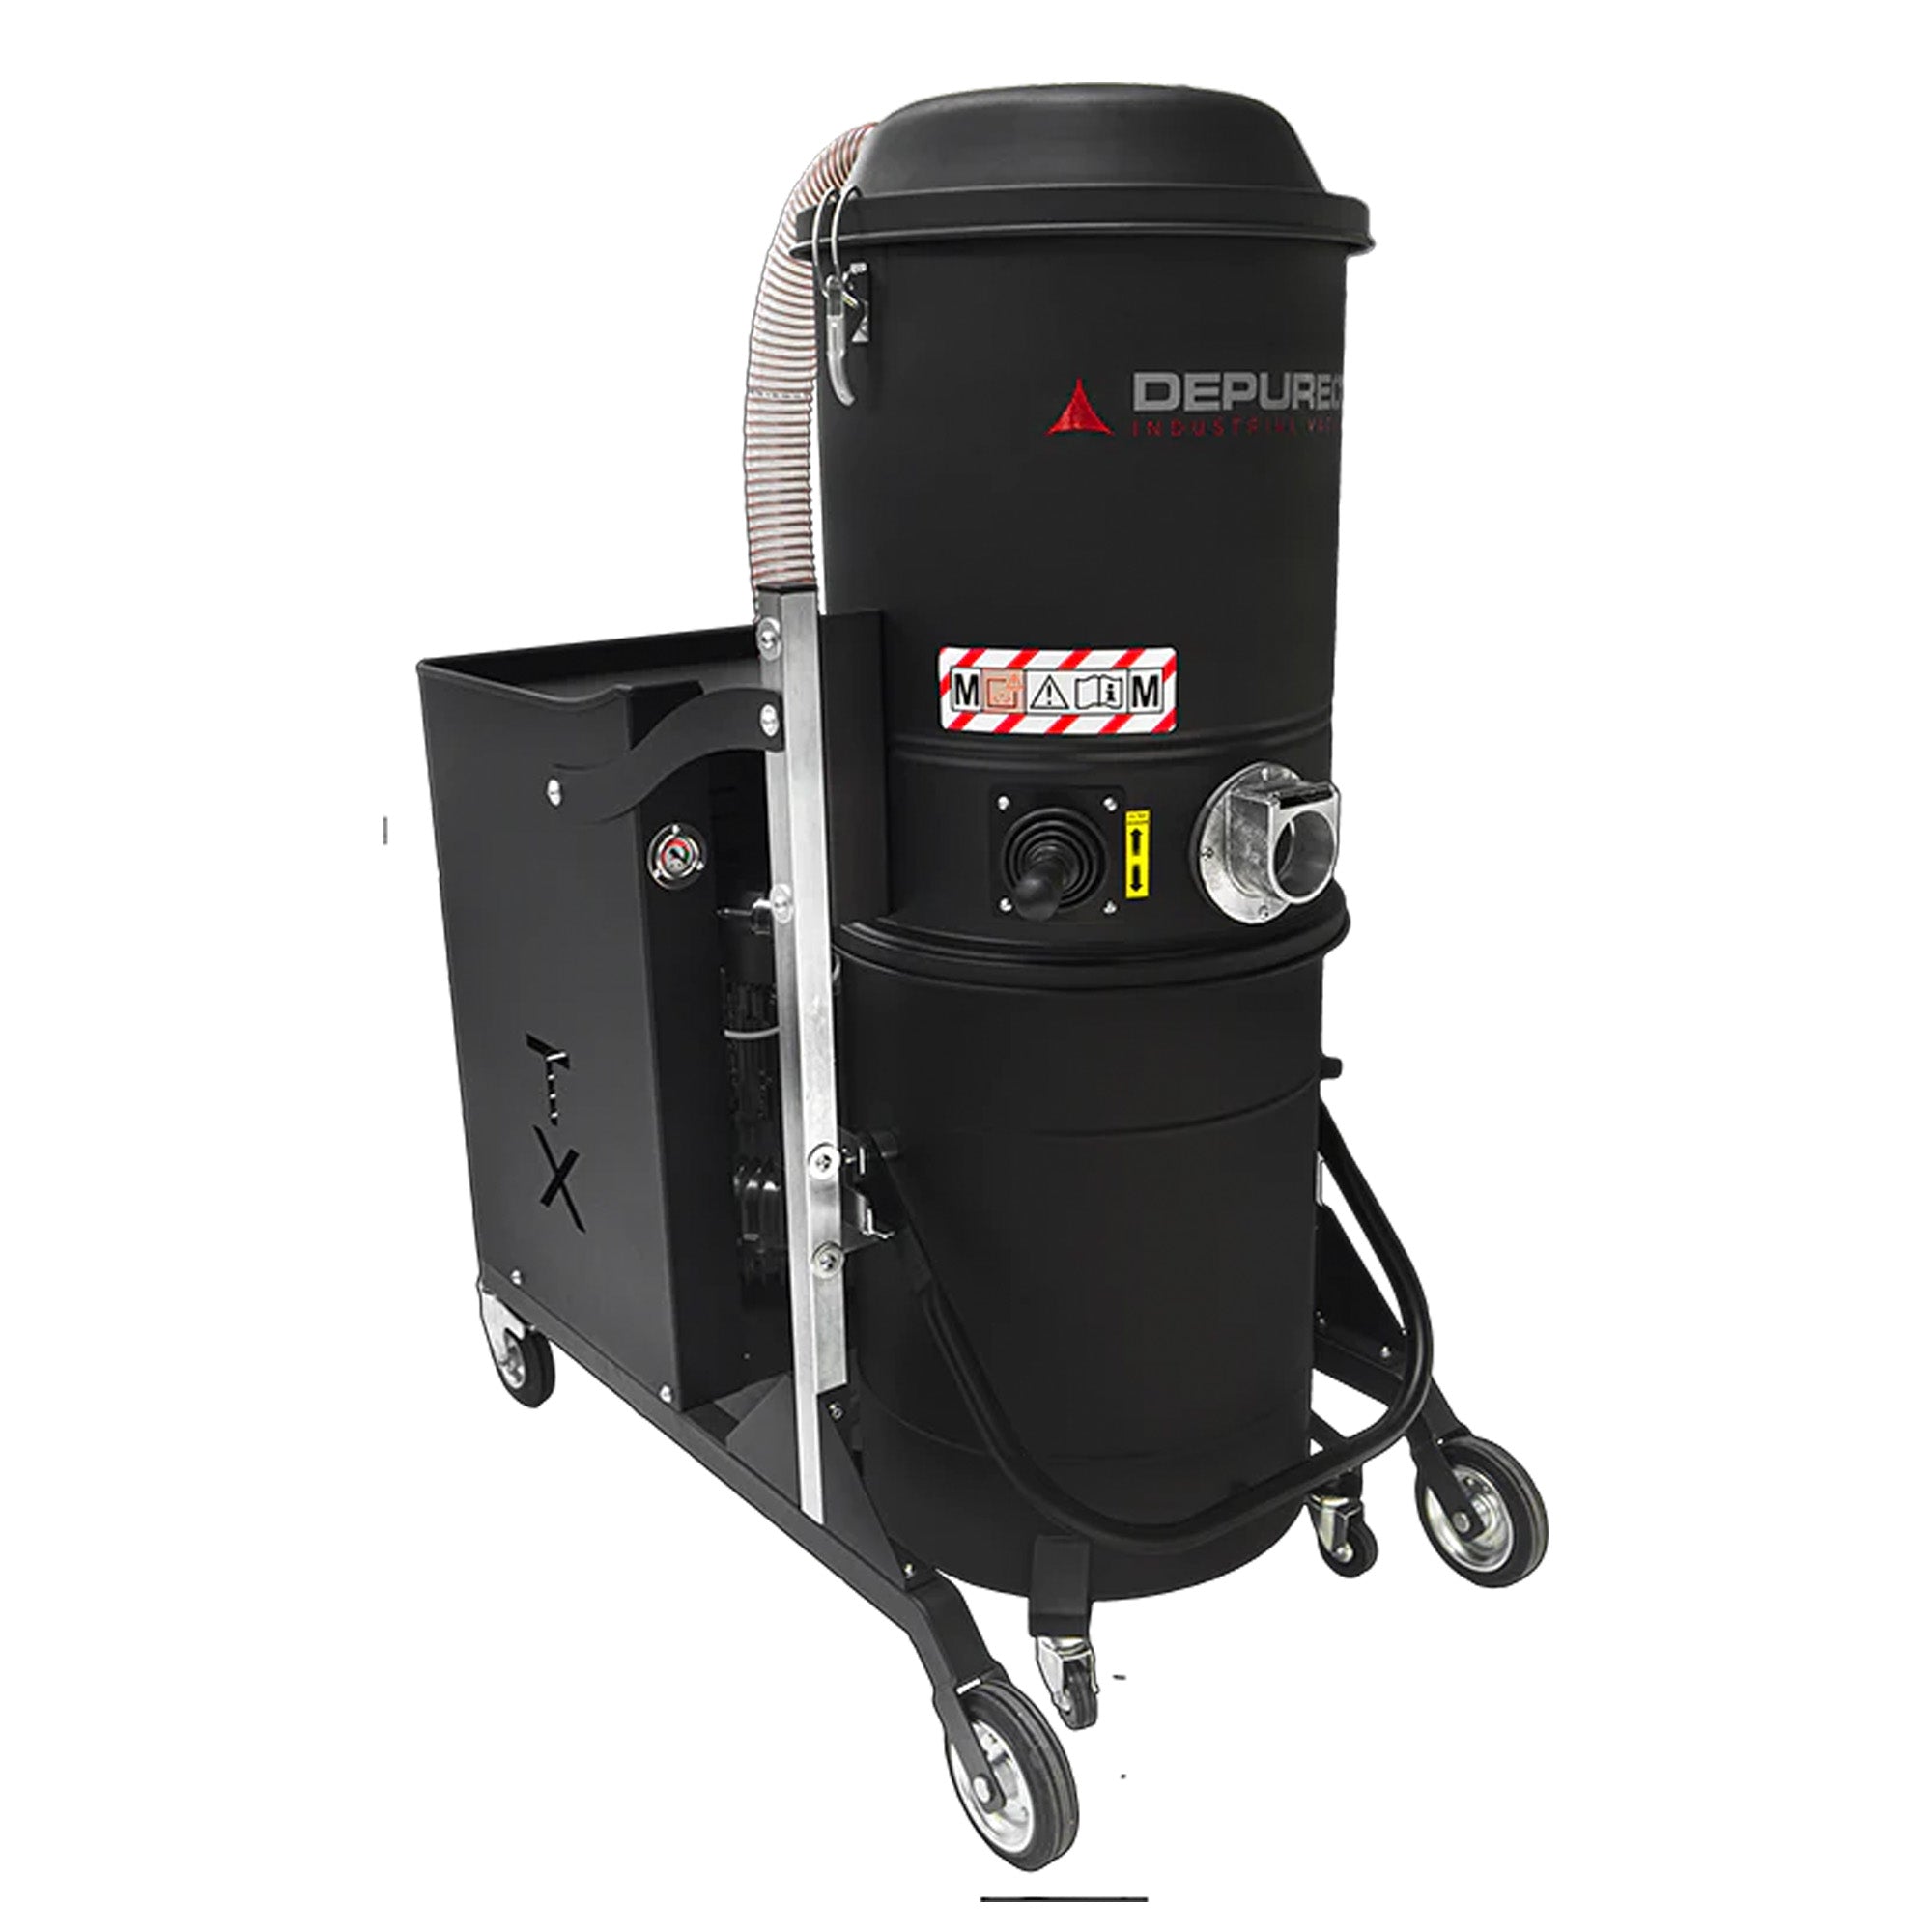 Depureco TX 750 Three-Phase Industrial Vacuum Cleaner